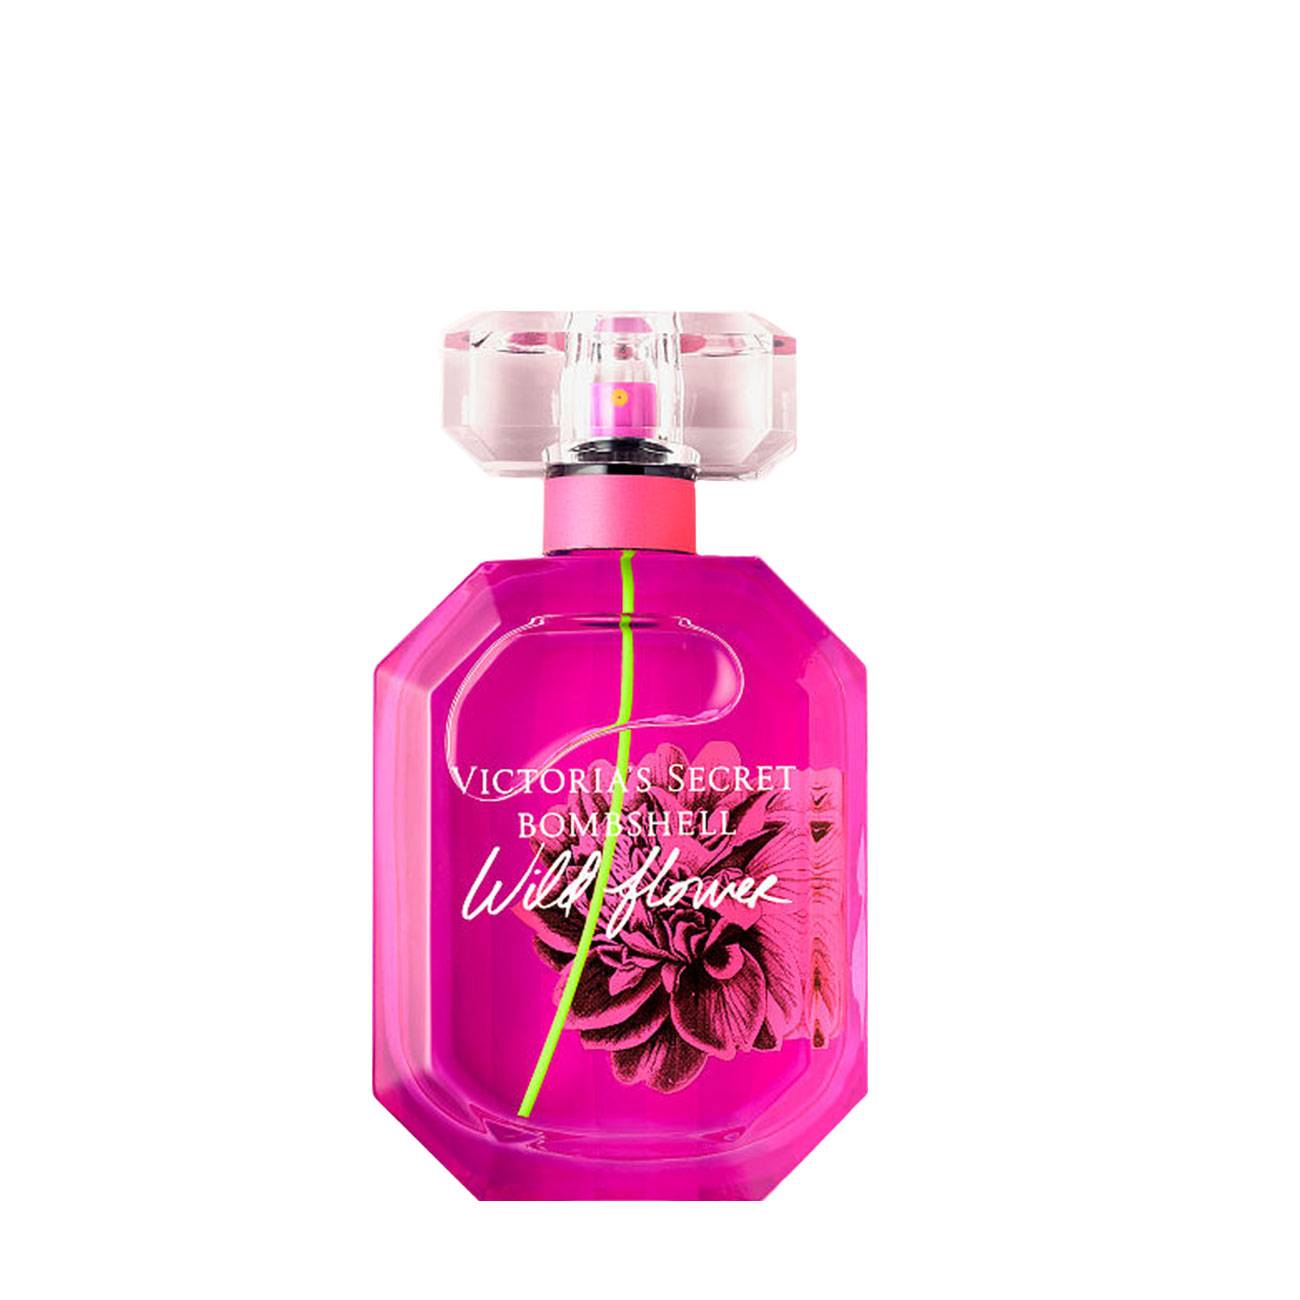 Apa de Parfum Victoria’s Secret BOMBSHELL WILD FLOWER 50ml cu comanda online